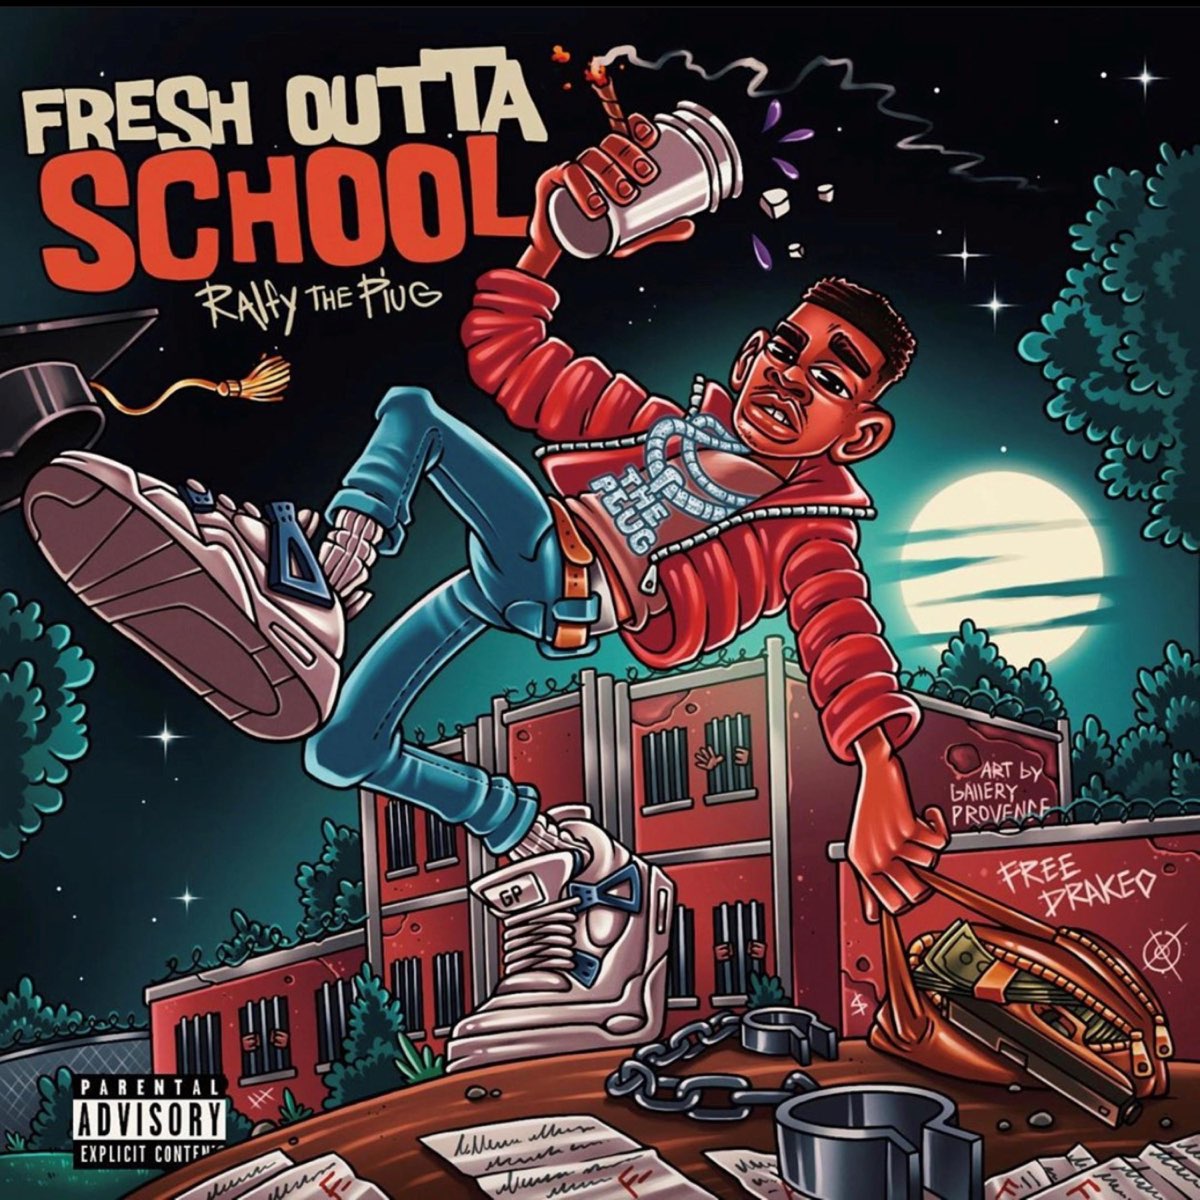 ‎Fresh Outta School by Ralfy the Plug on Apple Music